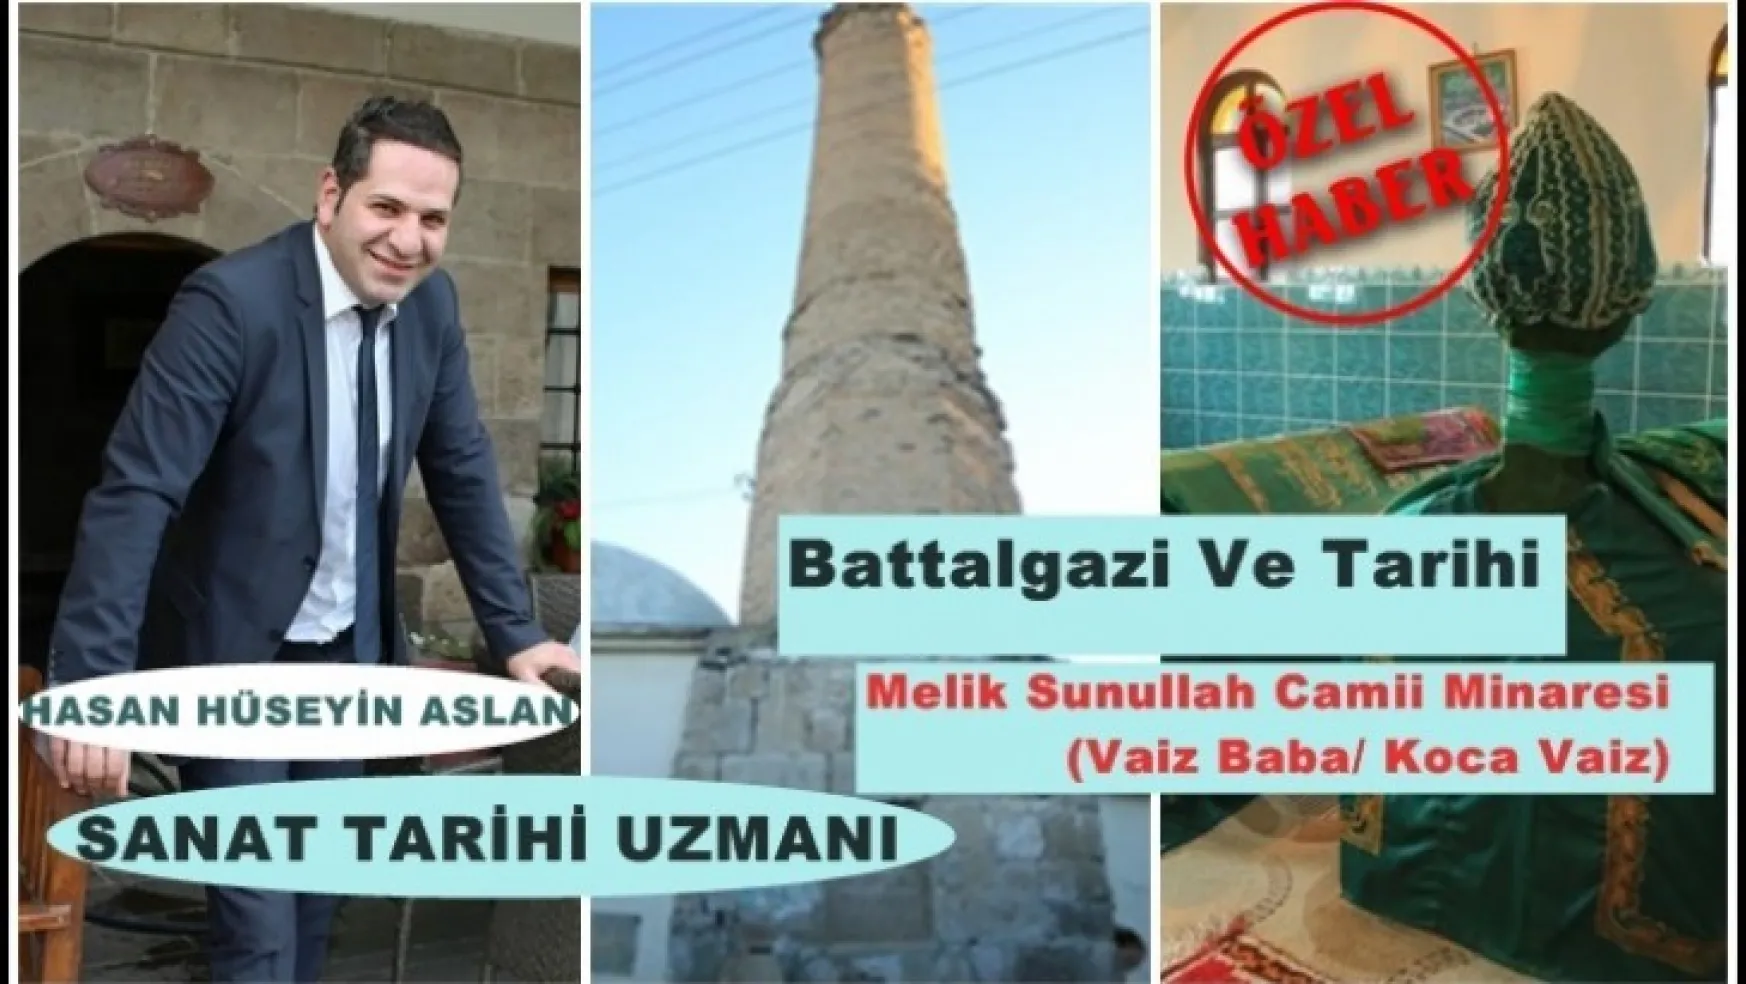 Battalgazi Ve Tarihi   Melik Sunullah Camii Minaresi (Vaiz Baba/ Koca Vaiz)